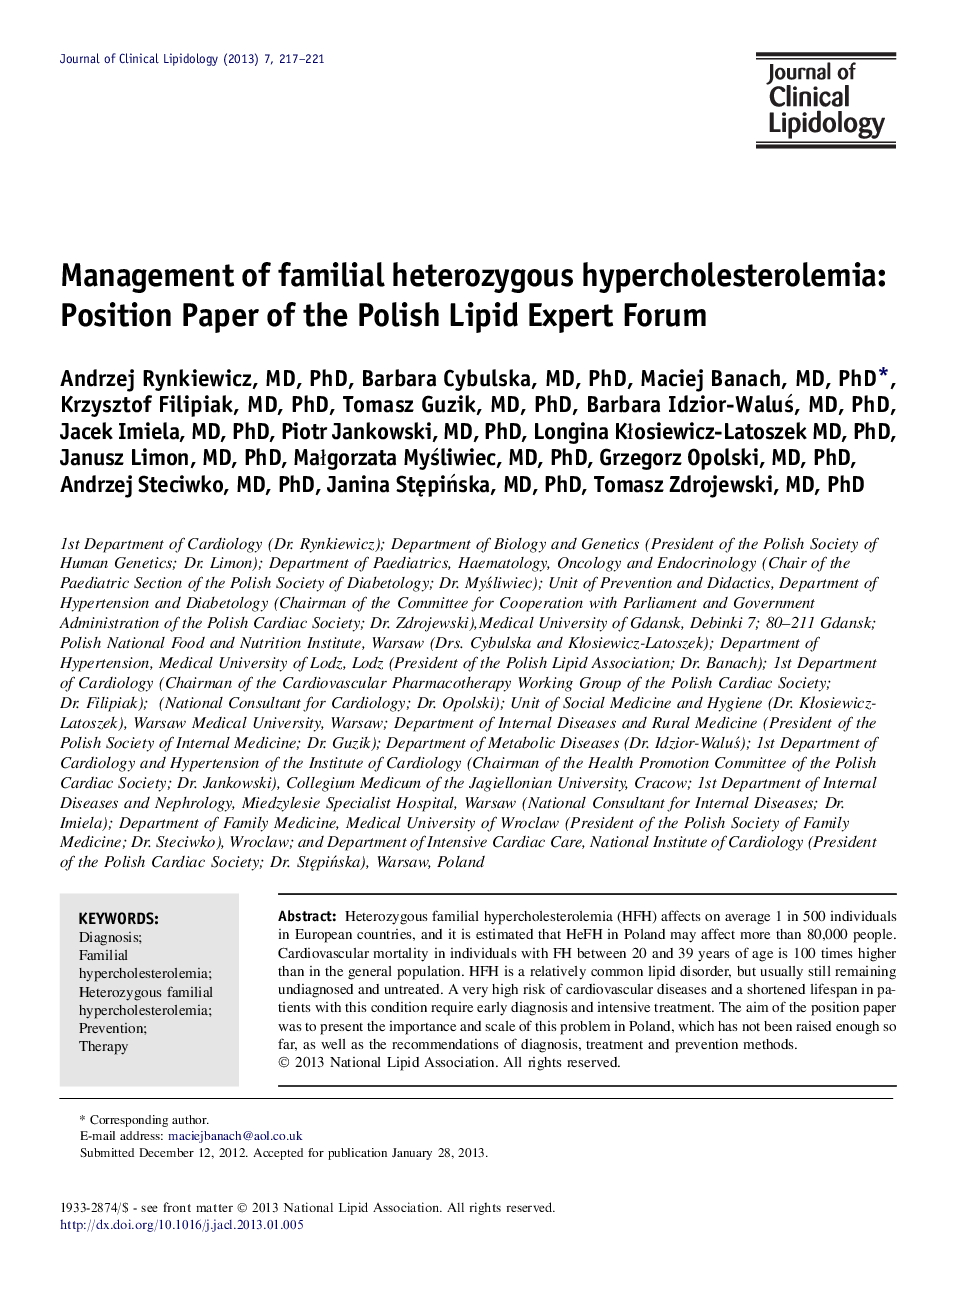 Management of familial heterozygous hypercholesterolemia: Position Paper of the Polish Lipid Expert Forum